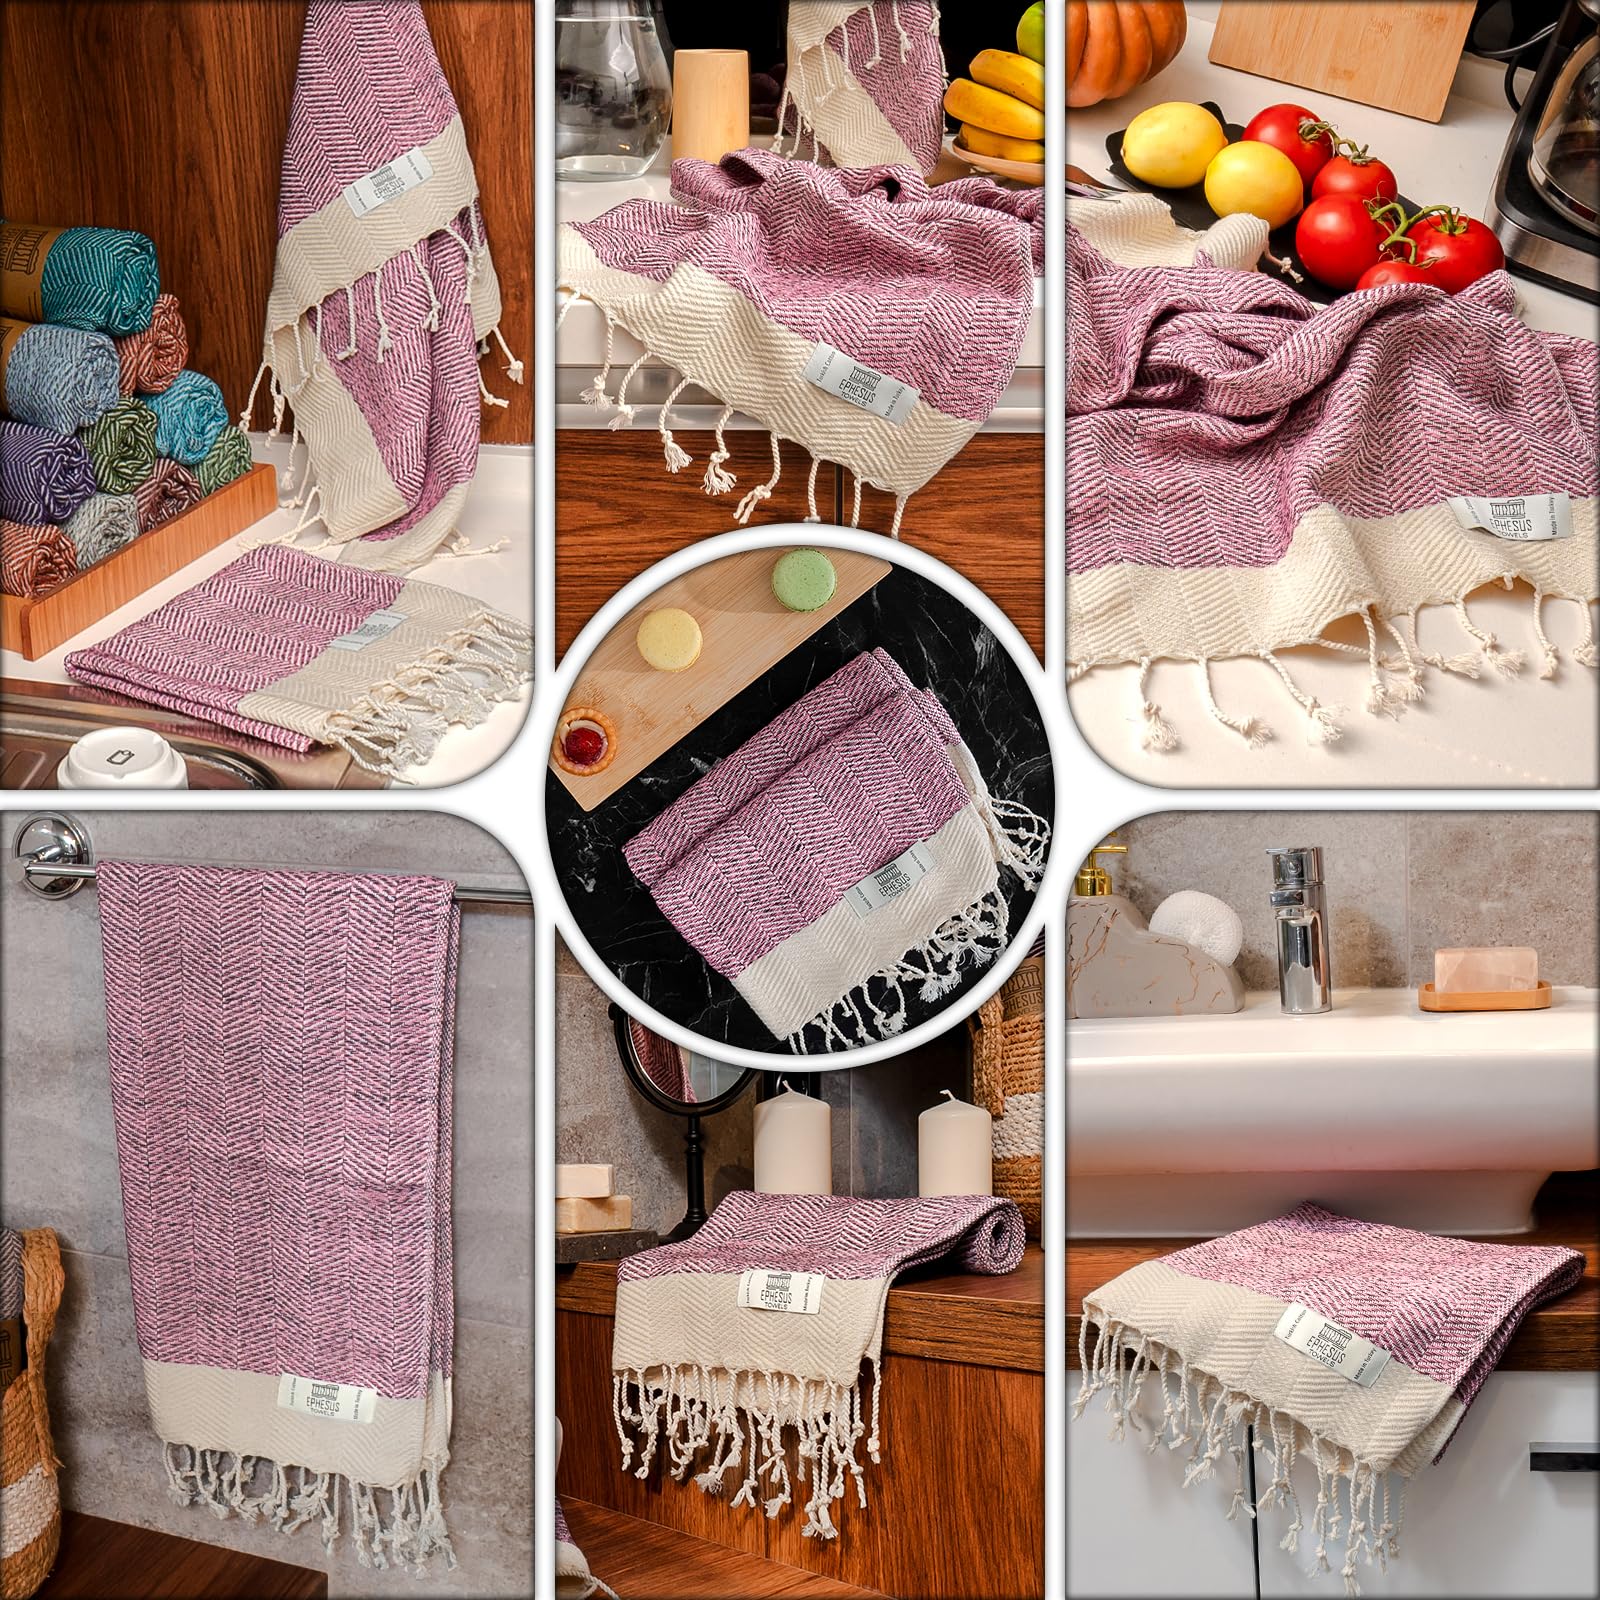 EPHESUS TOWELS Hand Towels - Set of 2 | 18" x 30" - Decorative Turkish Hand Towel for Bathroom, Kitchen, Guest, Face, Hair, Tea, Dishcloth (Herringbone, Pink)